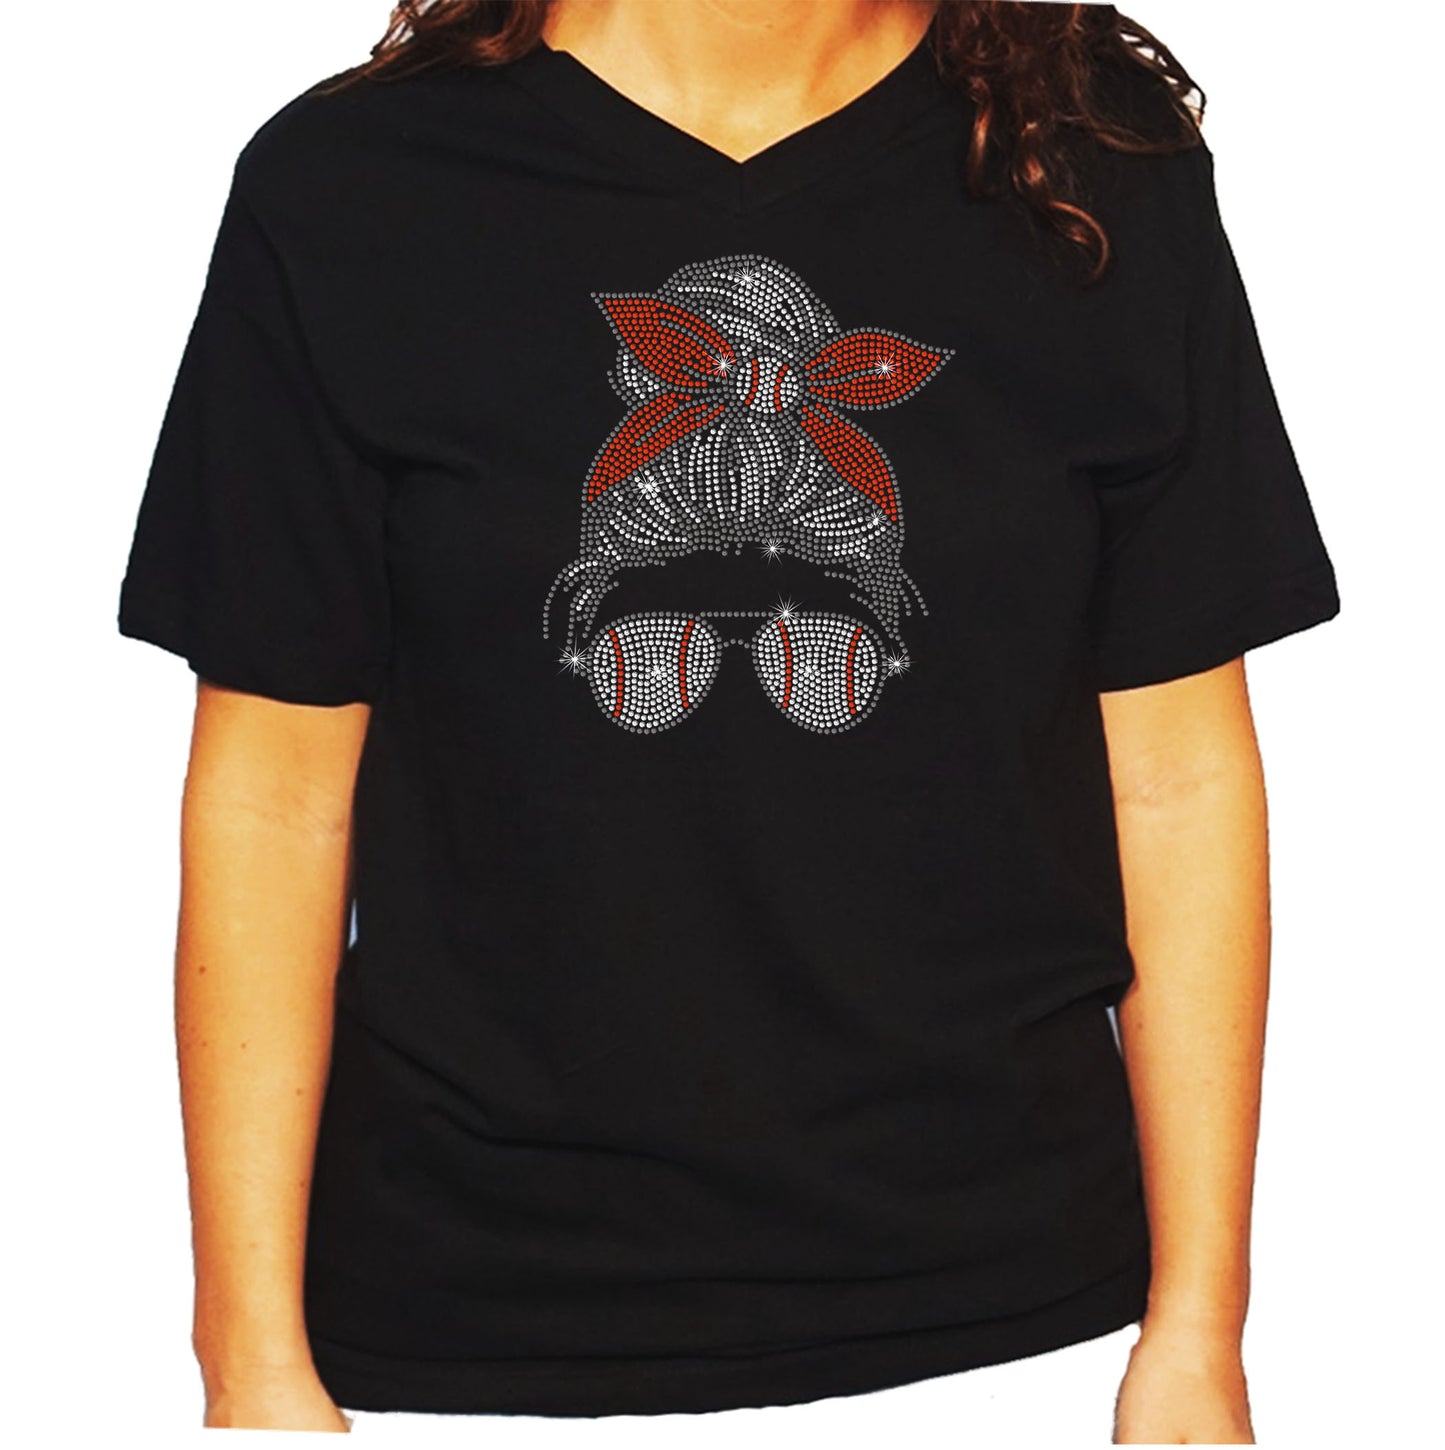 Women's/Unisex Rhinestone T-Shirt with Baseball Mom with Glasses and Hair Bun - Baseball Bandana, Baseball Shirt